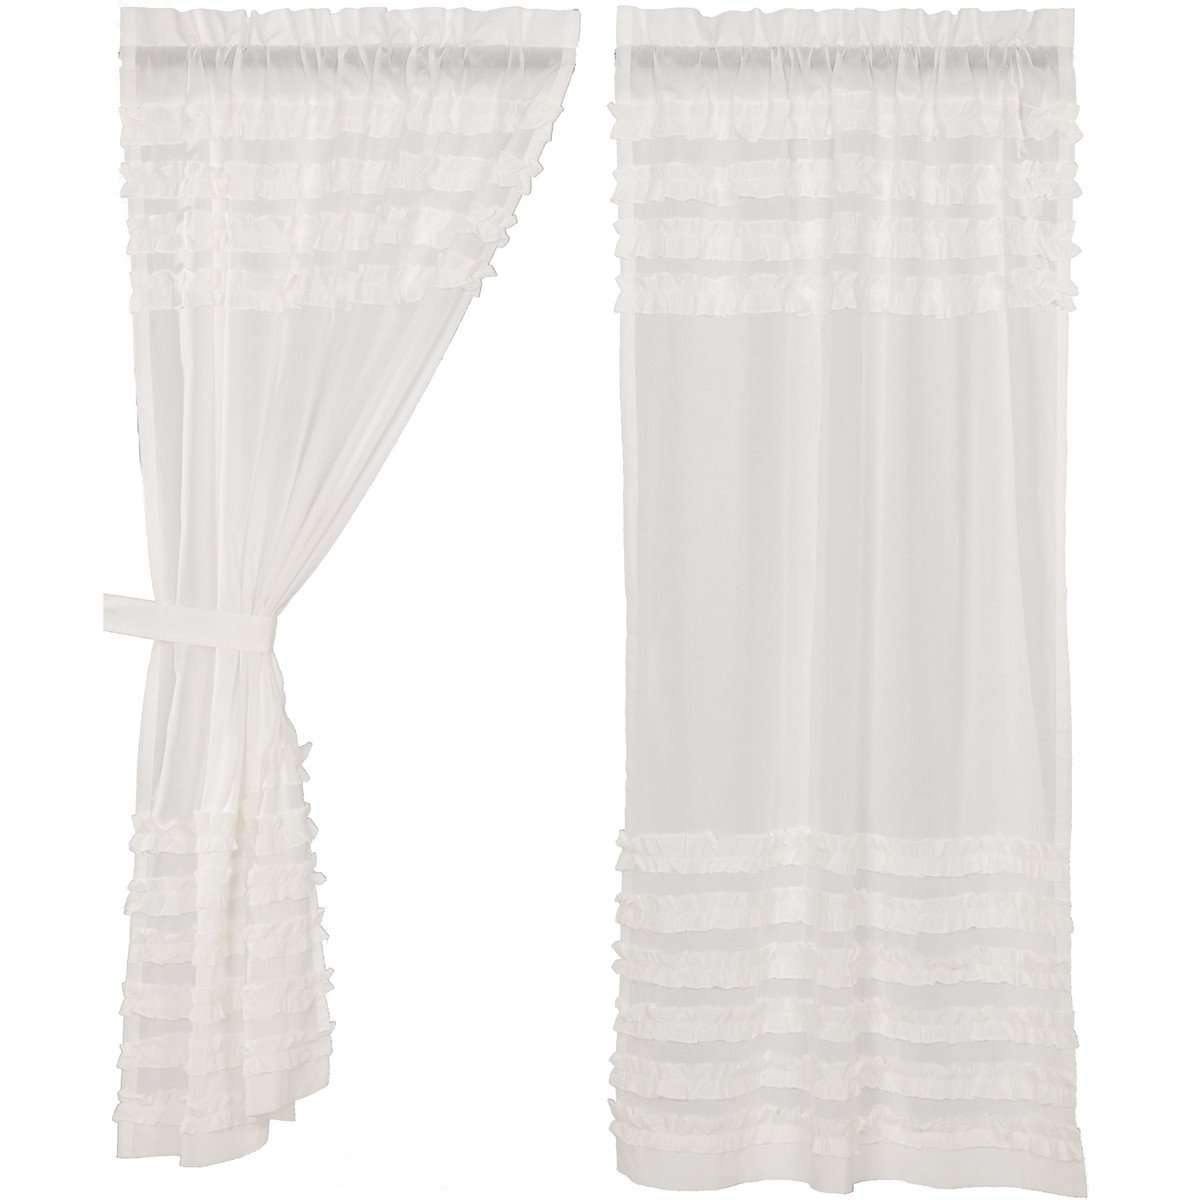 White Ruffled Sheer Petticoat Short Panel Curtain Set of 2 63x36 VHC Brands - The Fox Decor